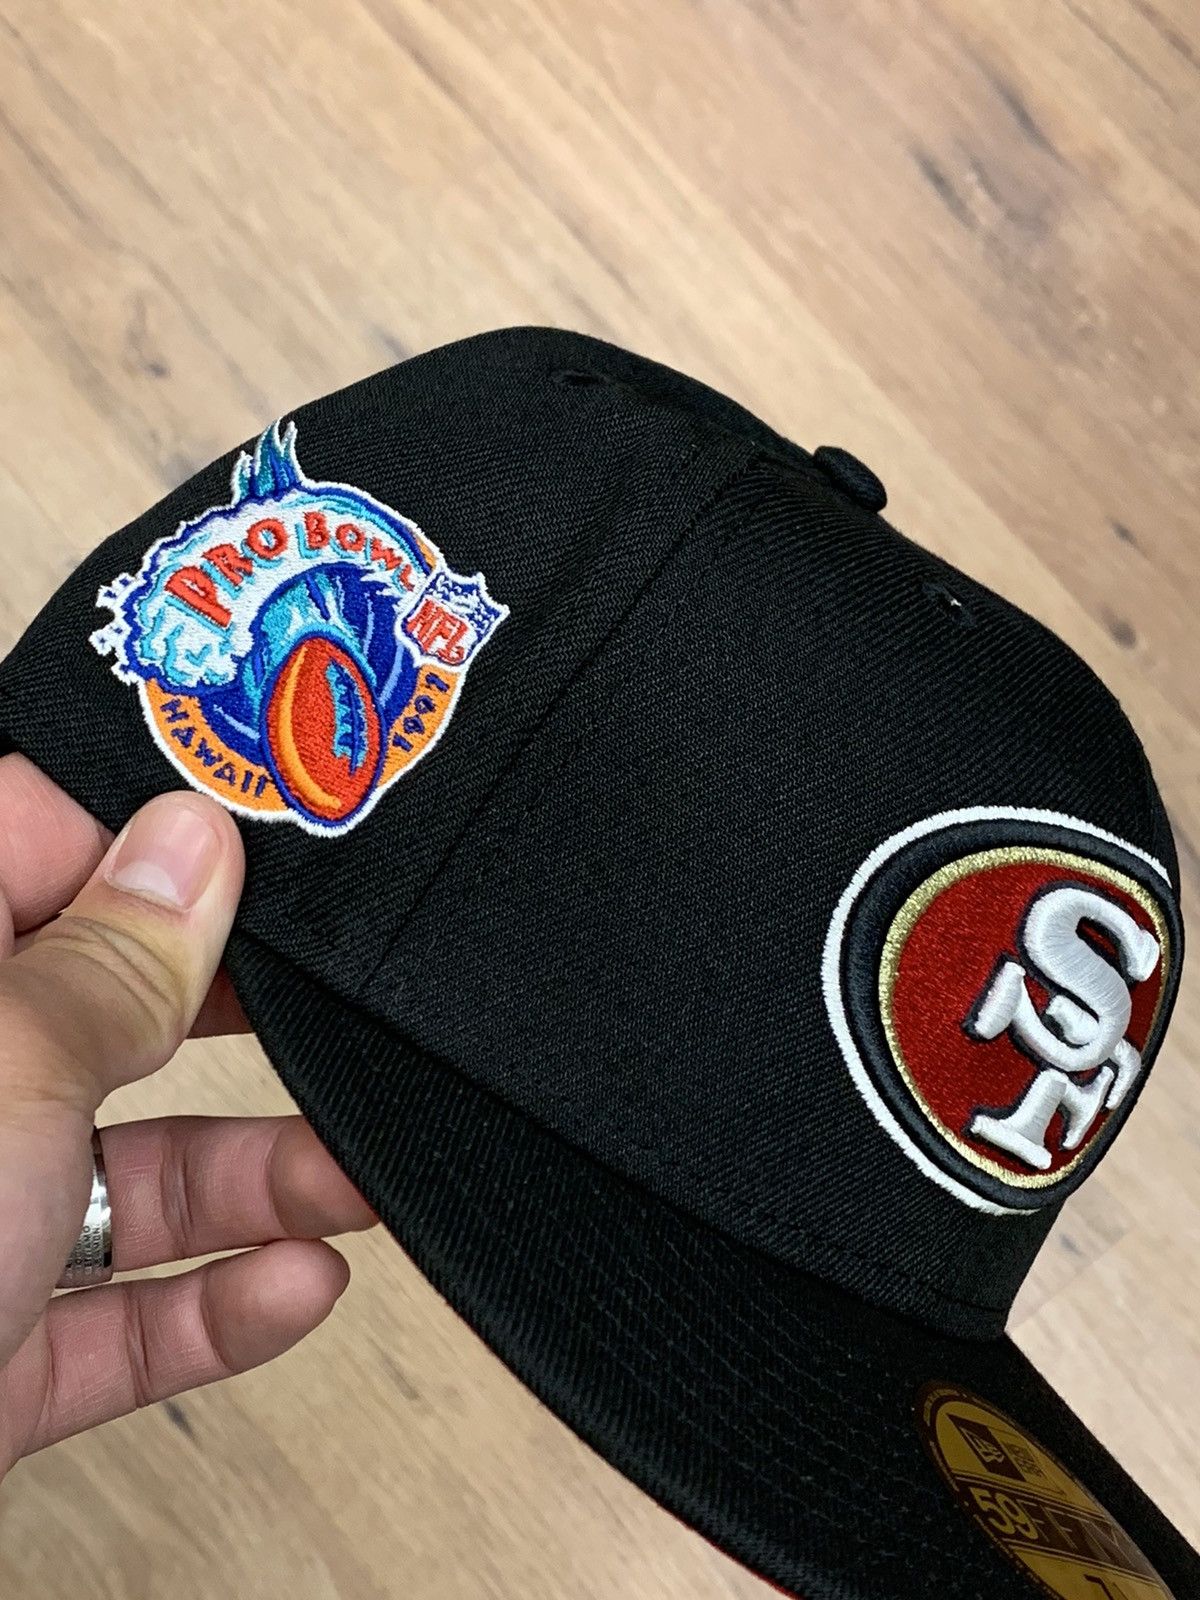 New Era 49ers pro bowl hat